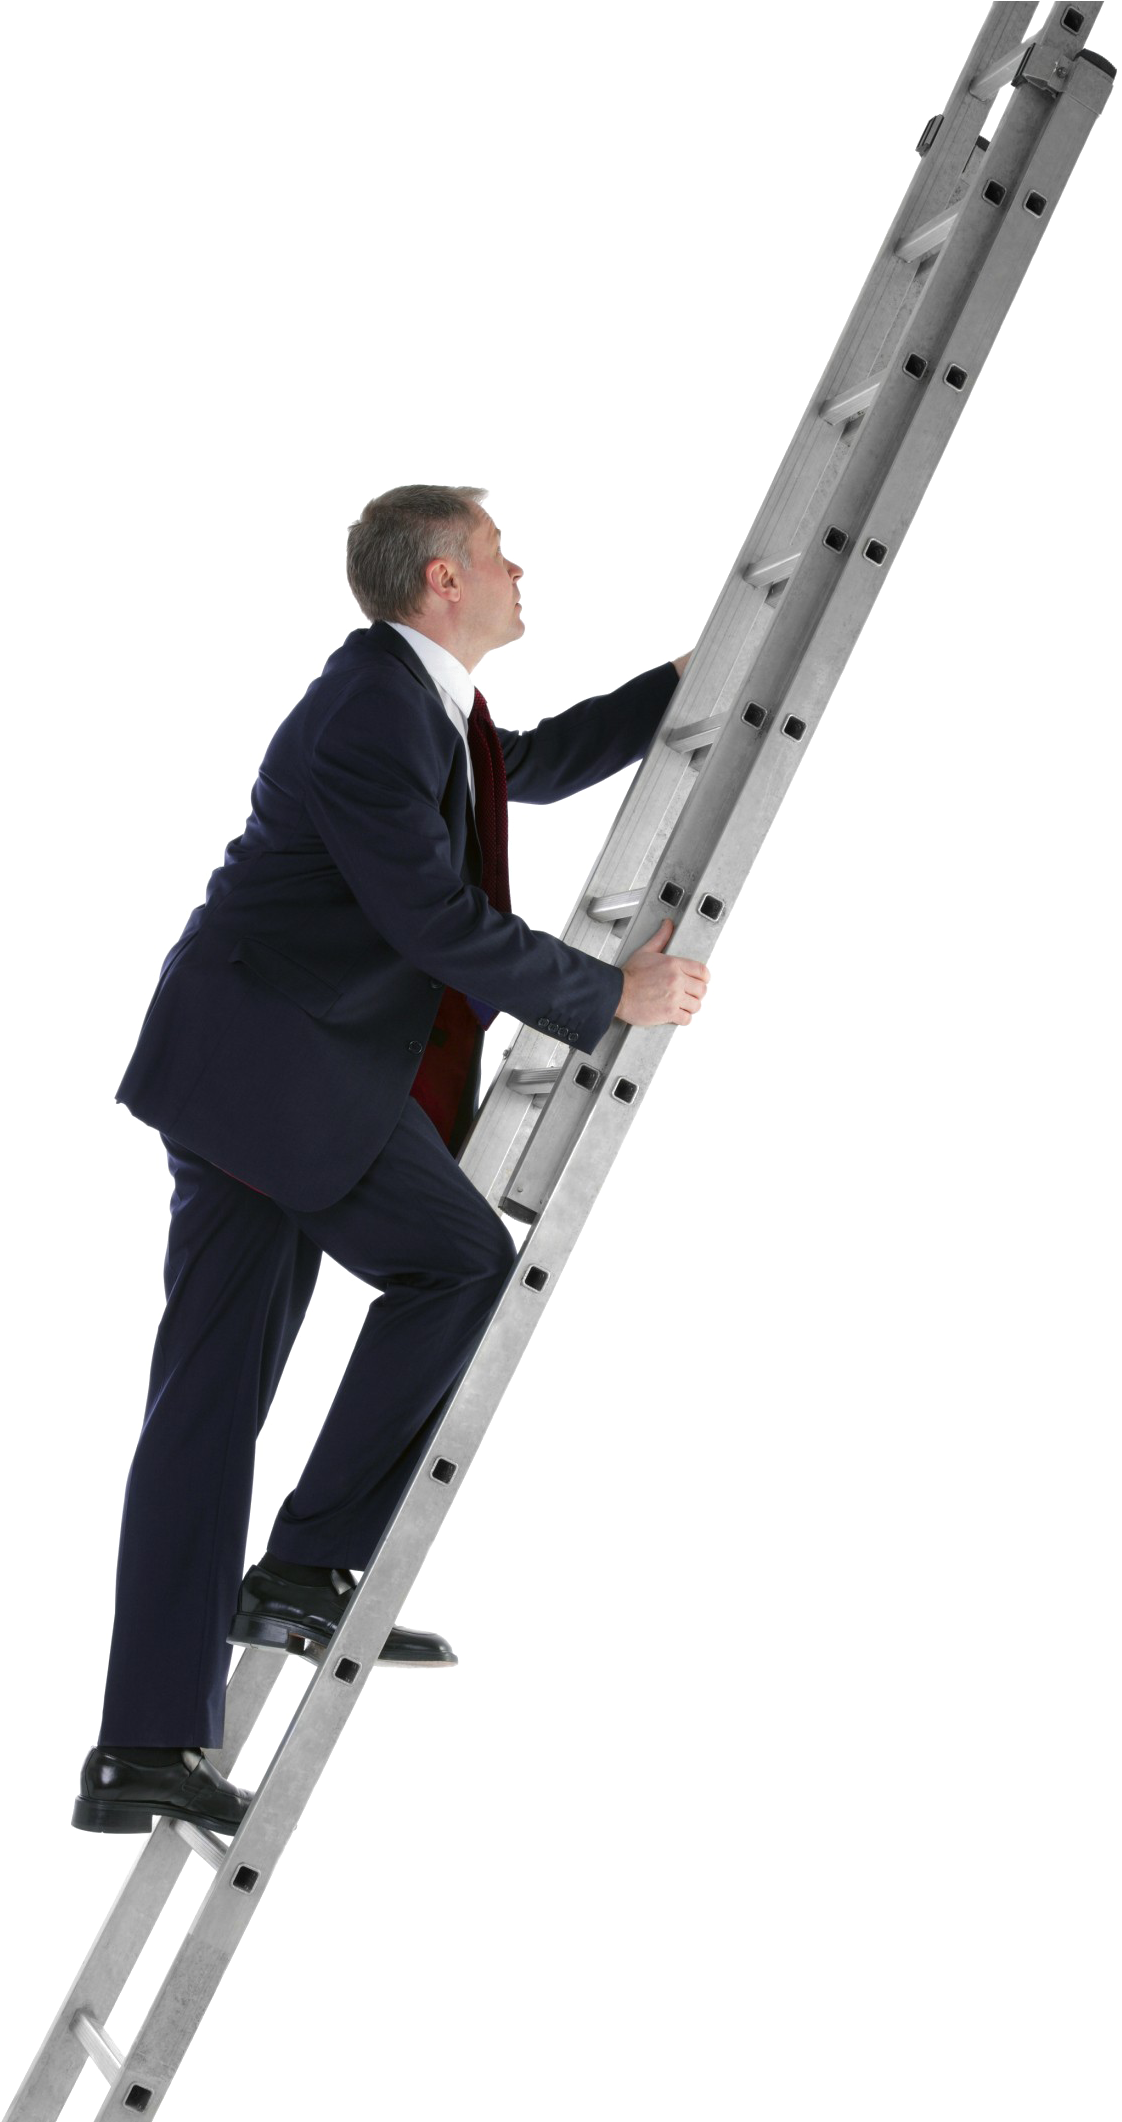 Ladder PNG Photo Image